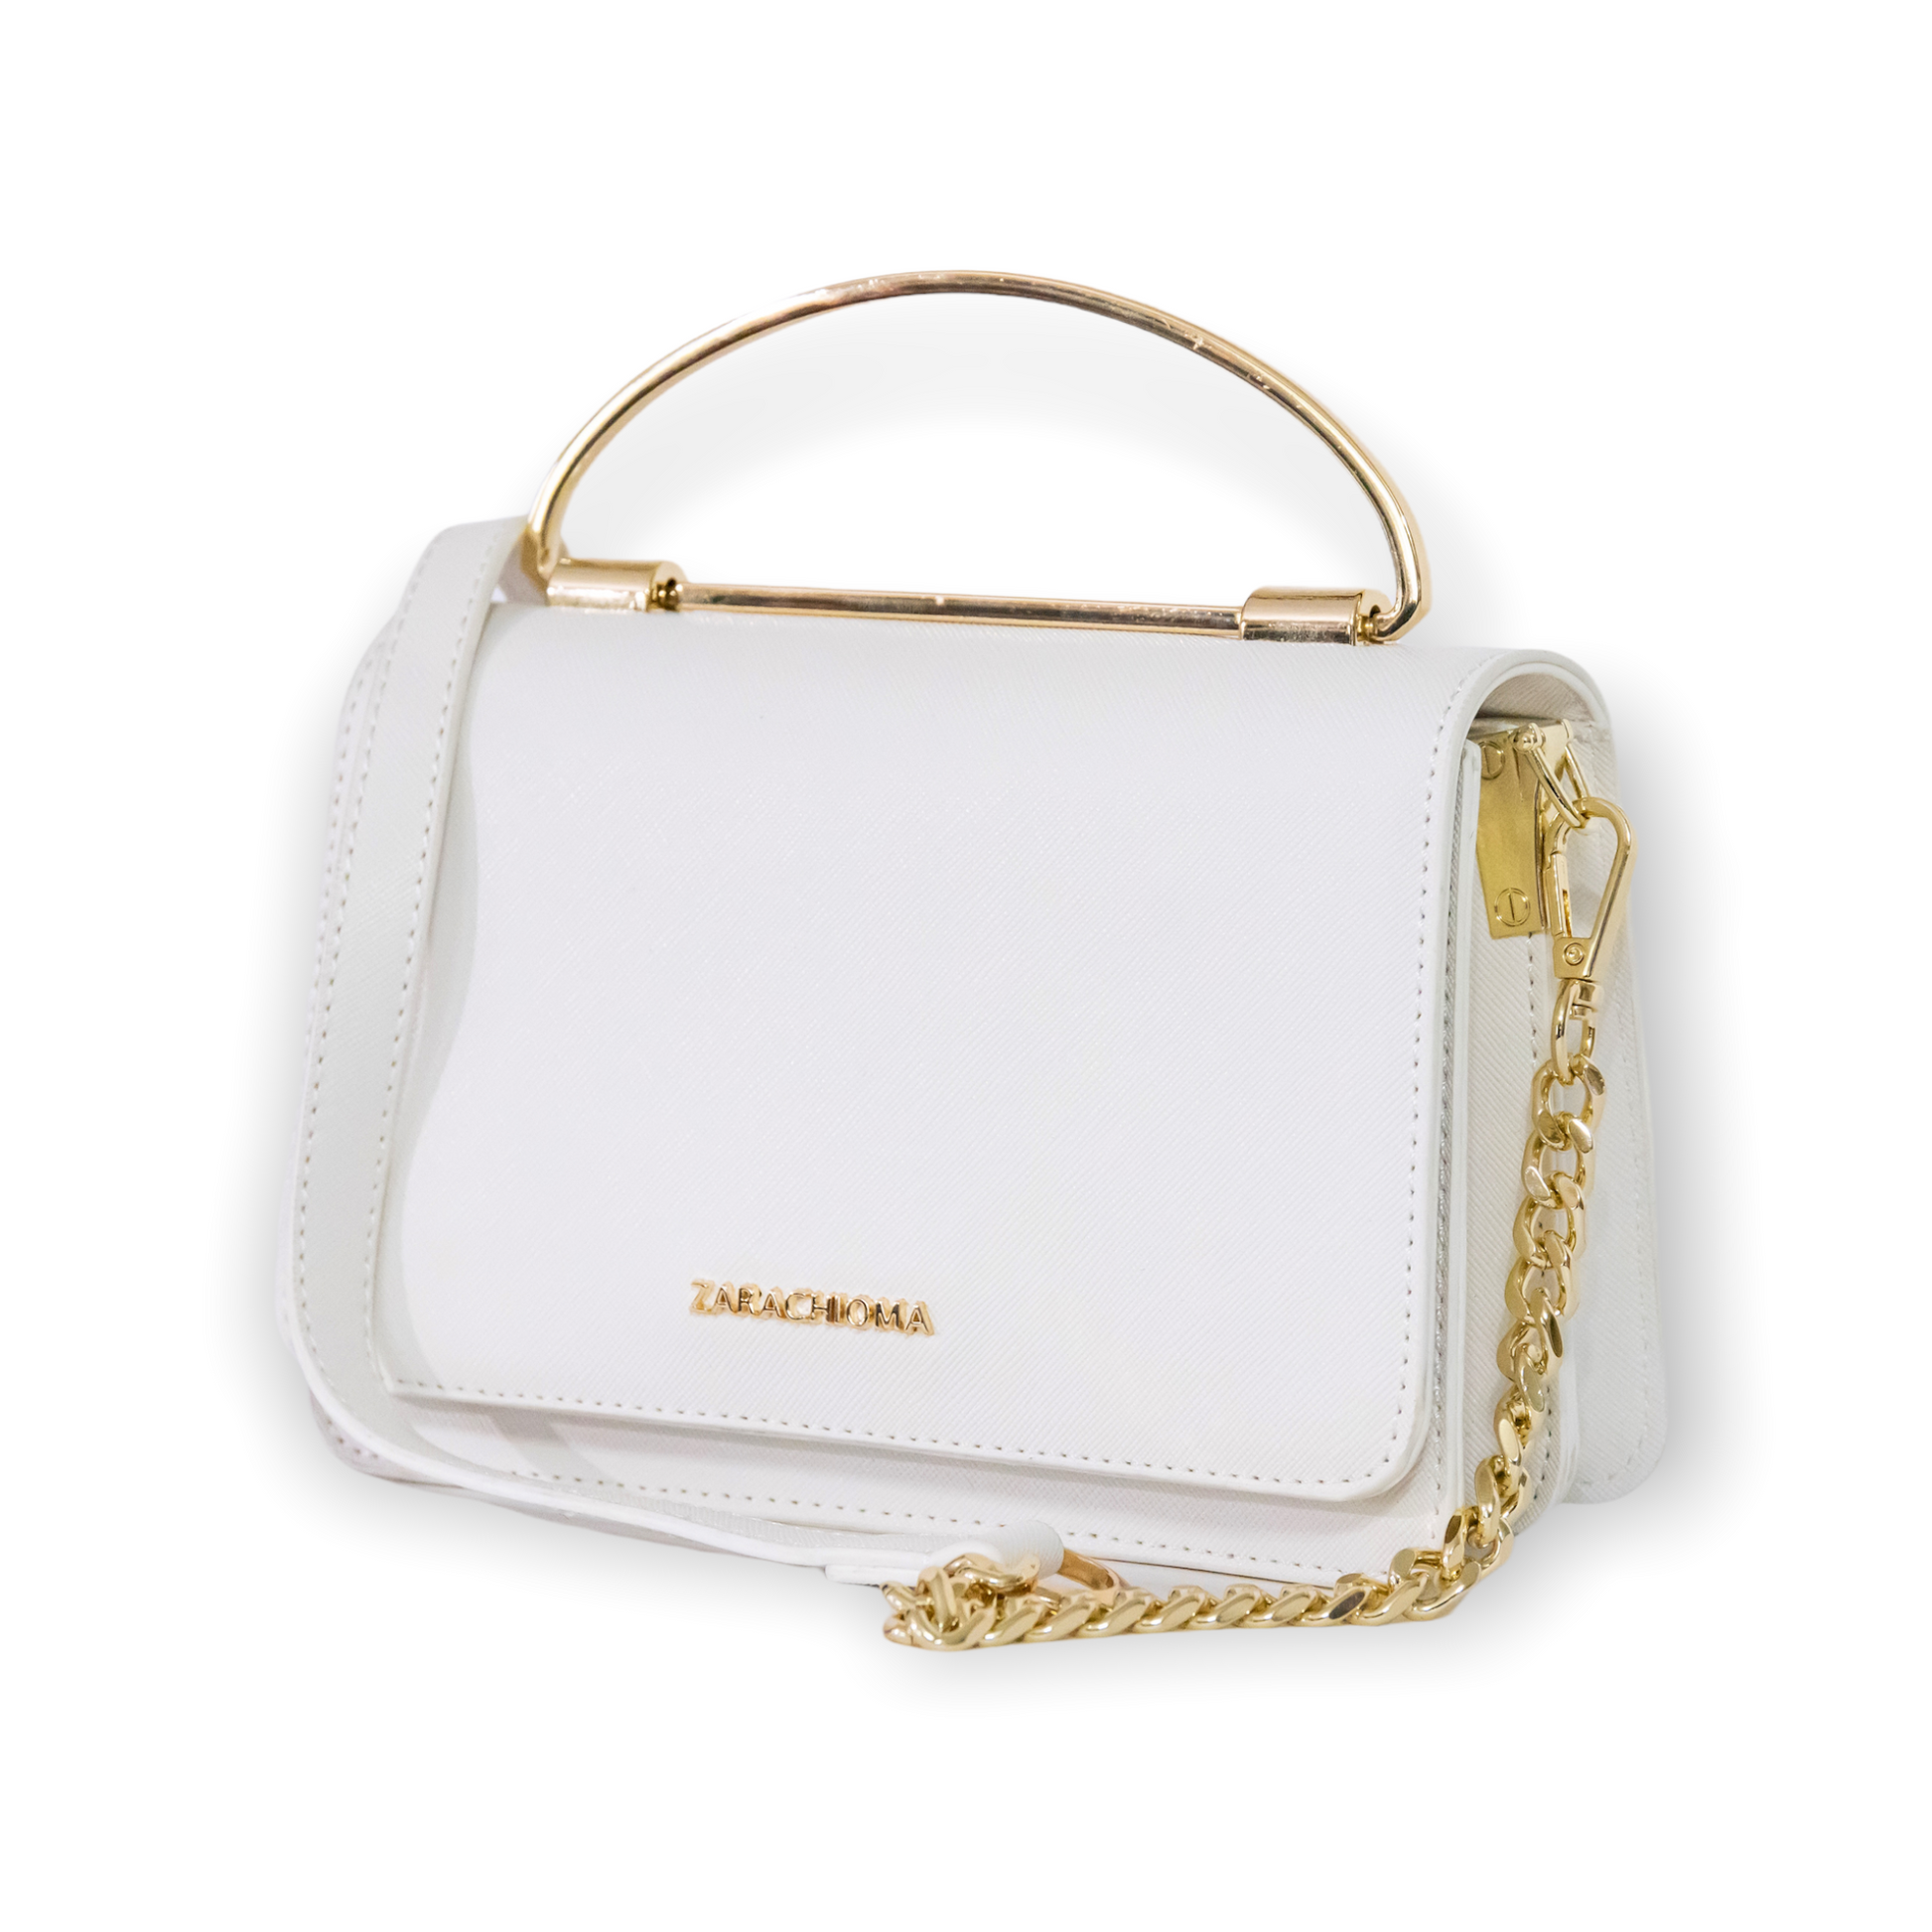 Winnie mini handbag in Snakeskin – ZARACHIOMA